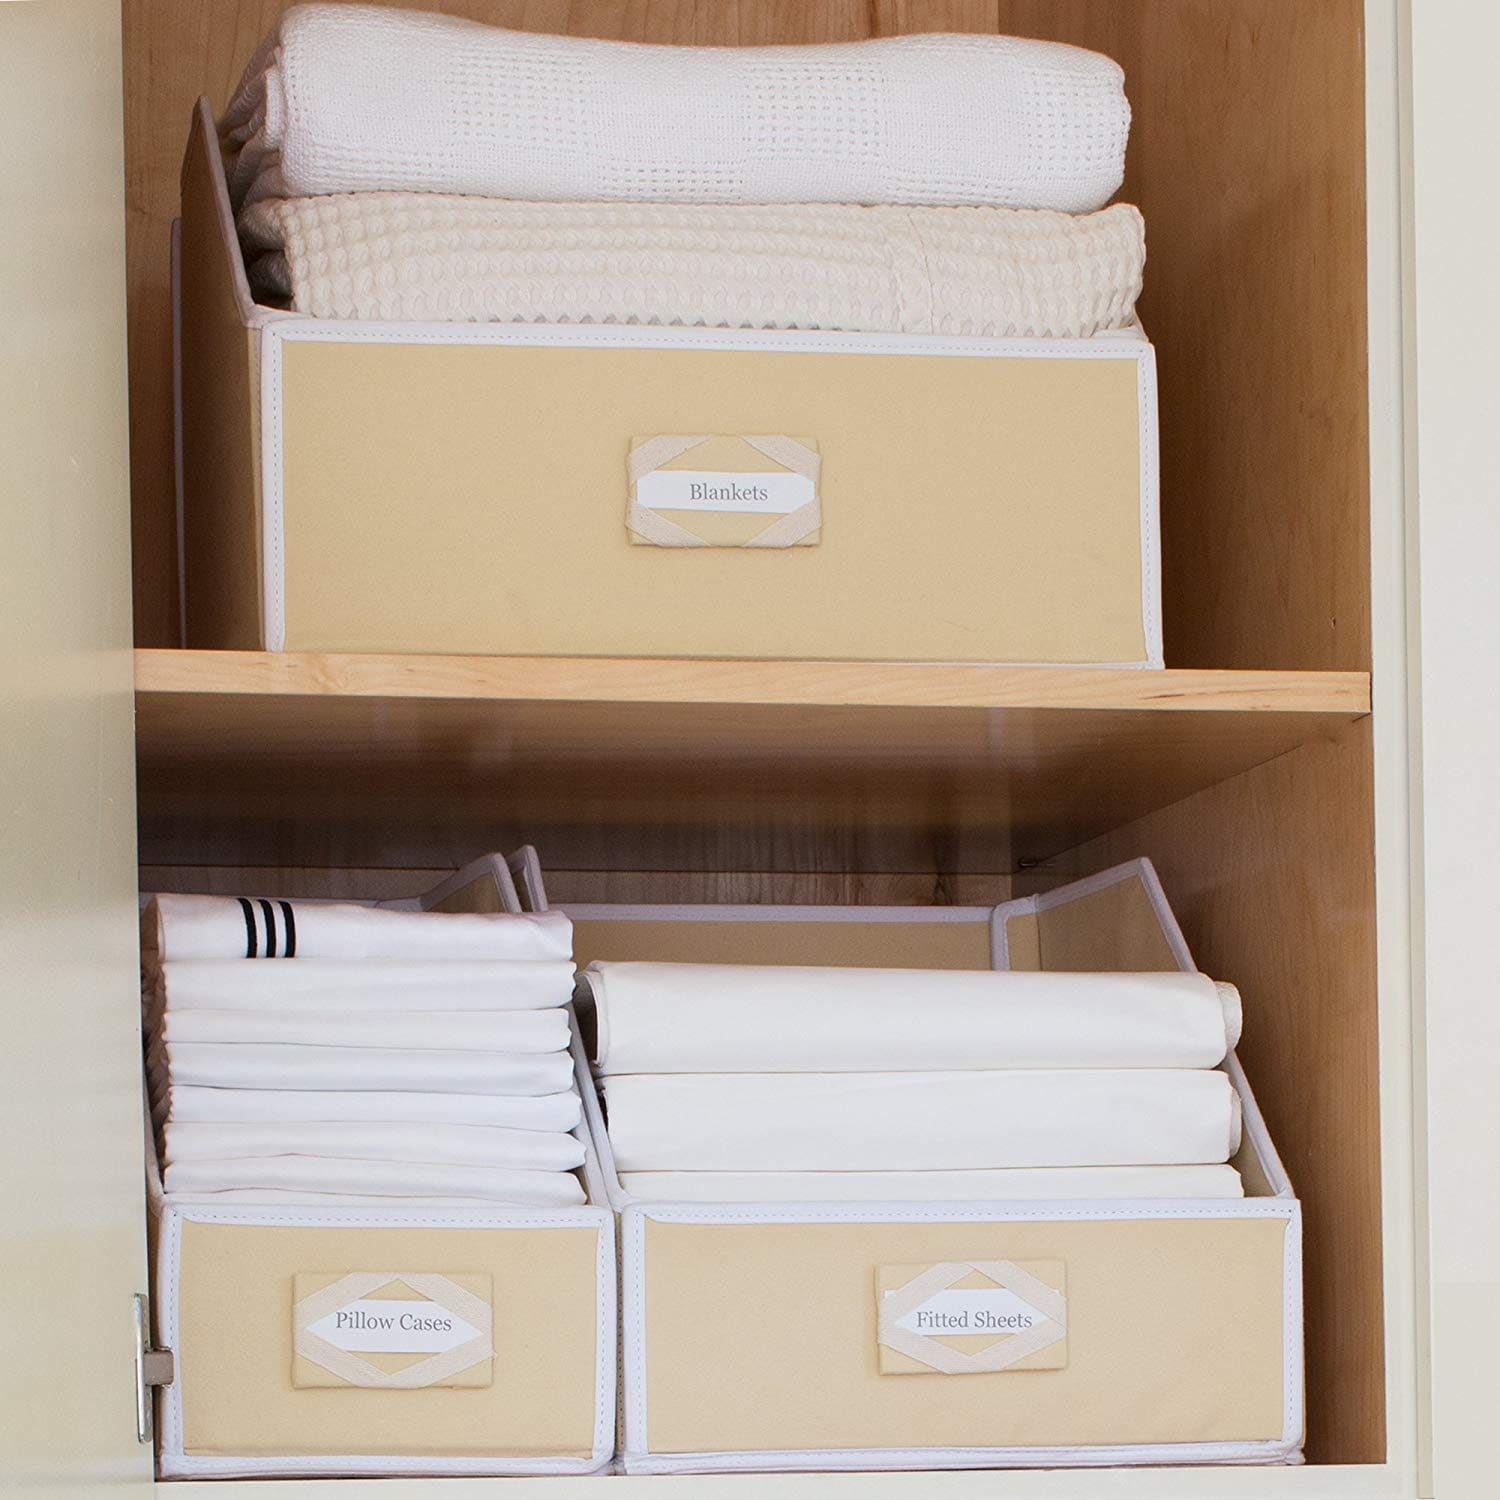 Linen Closet Storage Ideas